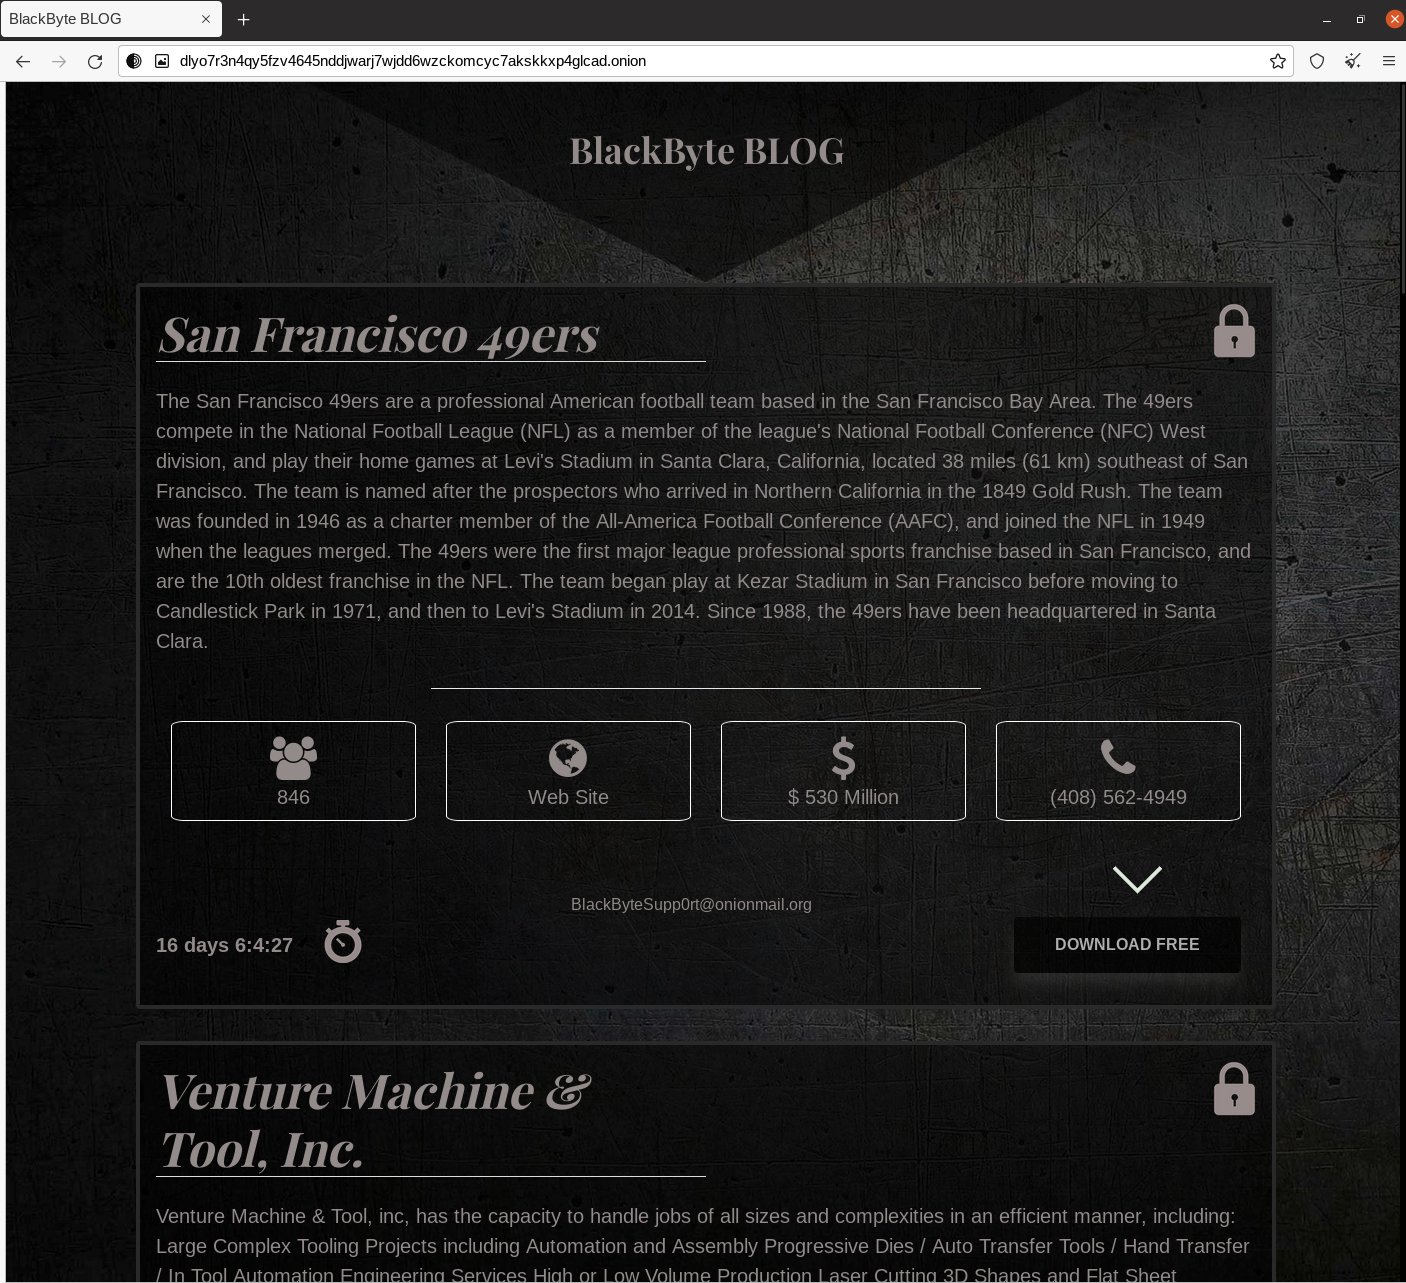 BlackByteブログのSan Francisco 49ersに関するエントリのスクリーンショット。チームに関する情報、従業員数、要求された身代金額、電話番号が記載されている。 